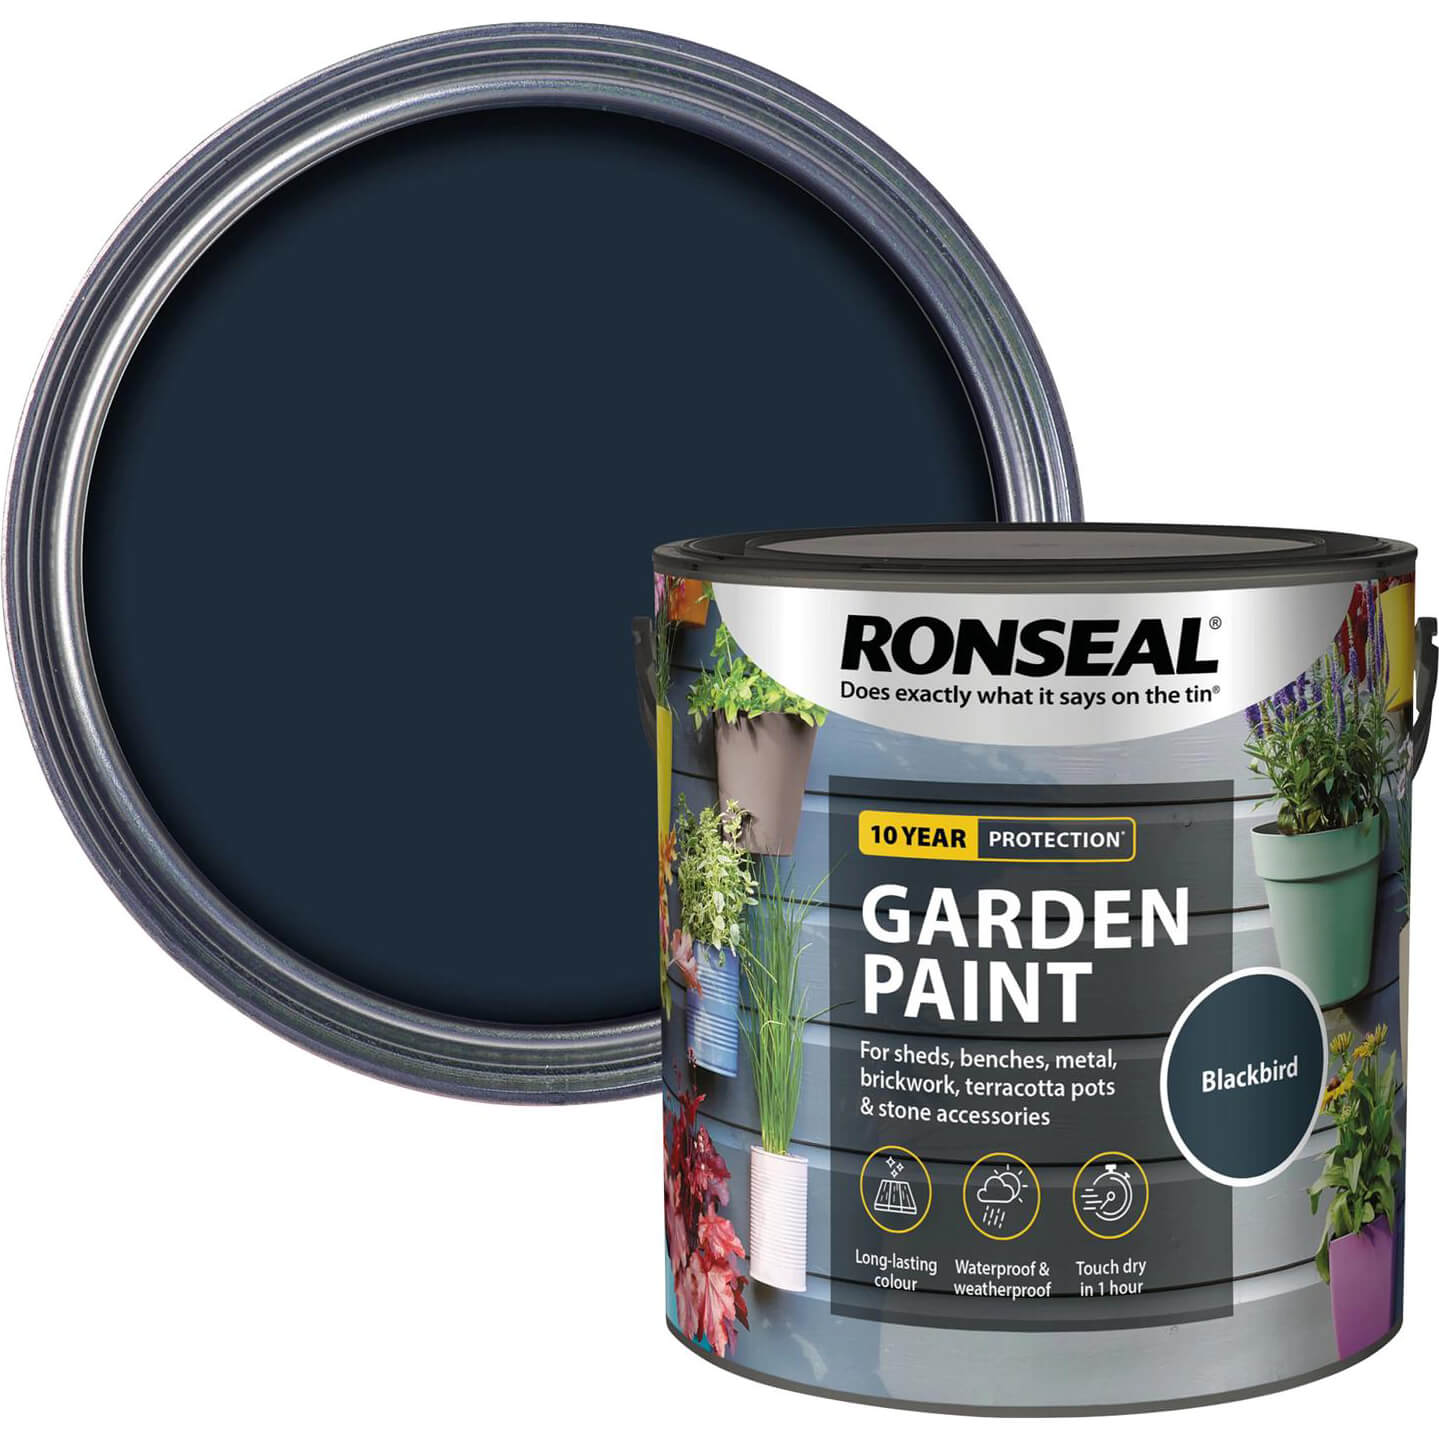 Image of Ronseal General Purpose Garden Paint Blackbird 2.5l